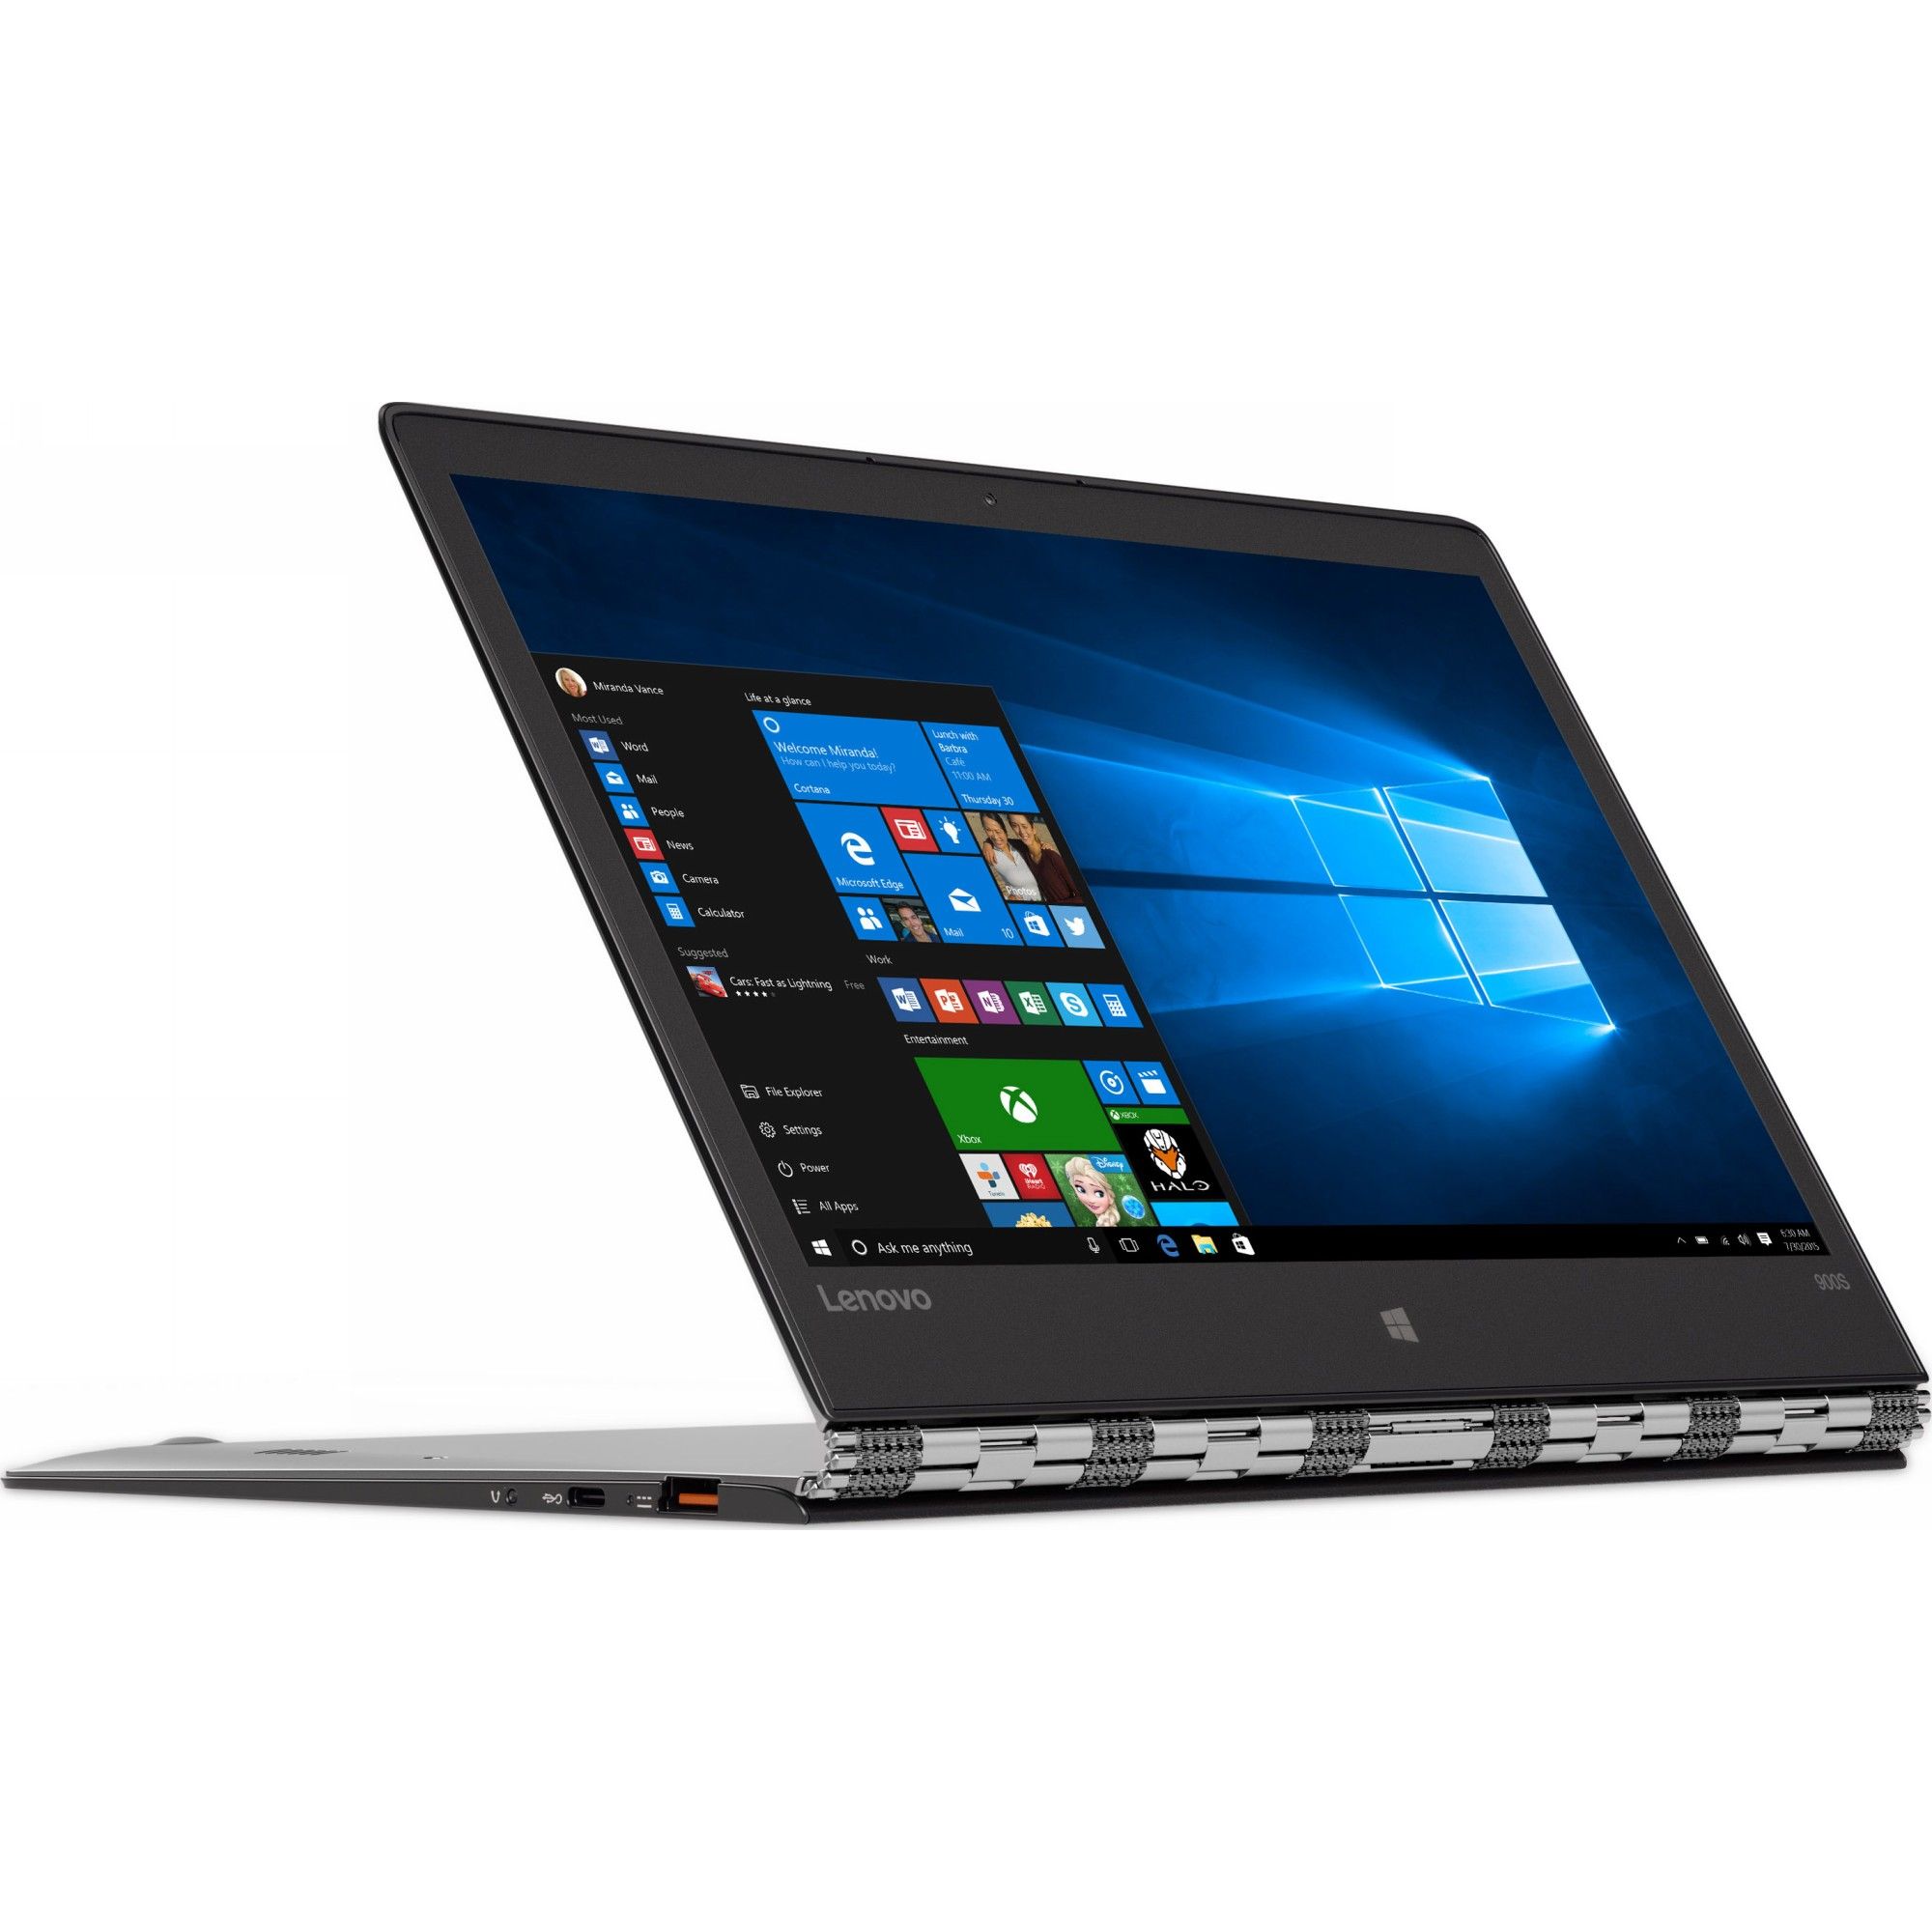  Laptop 2 in 1 Lenovo Yoga 900S-12ISK, Intel Core M7-6Y75, 8GB DDR3, SSD 512GB, Intel HD Graphics, Windows 10 Home 